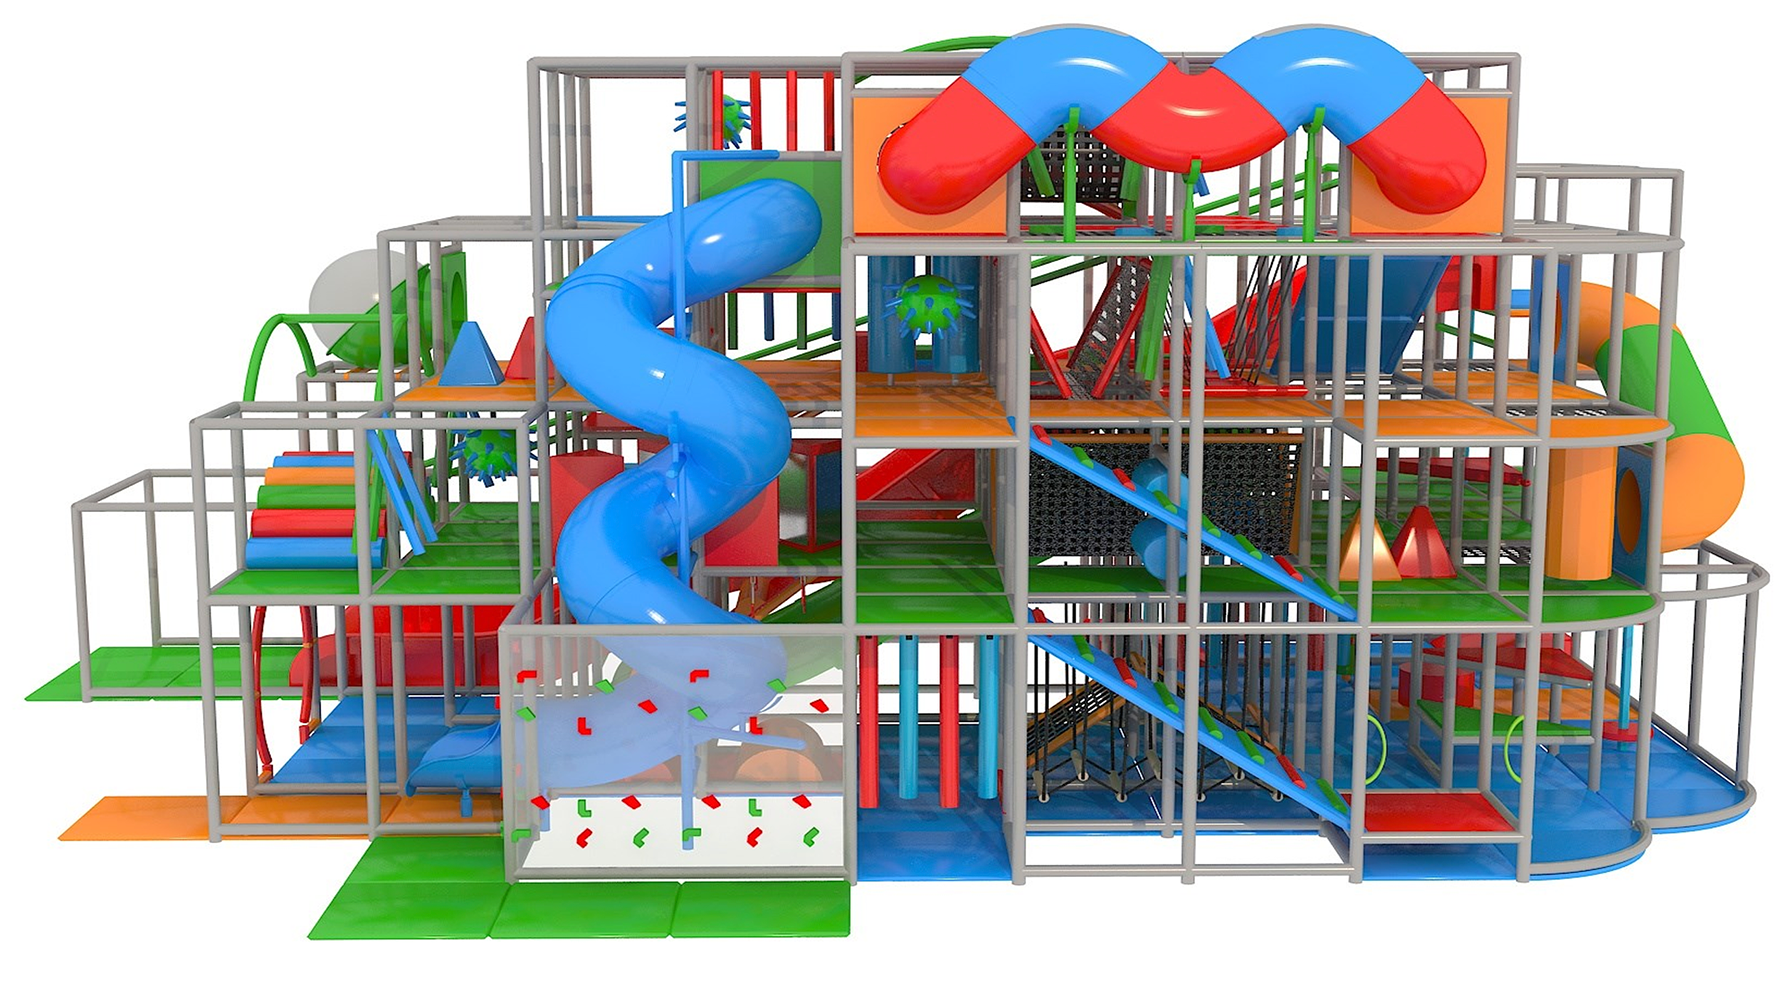 kplay_0002_kplay-indoor-playground-17.png